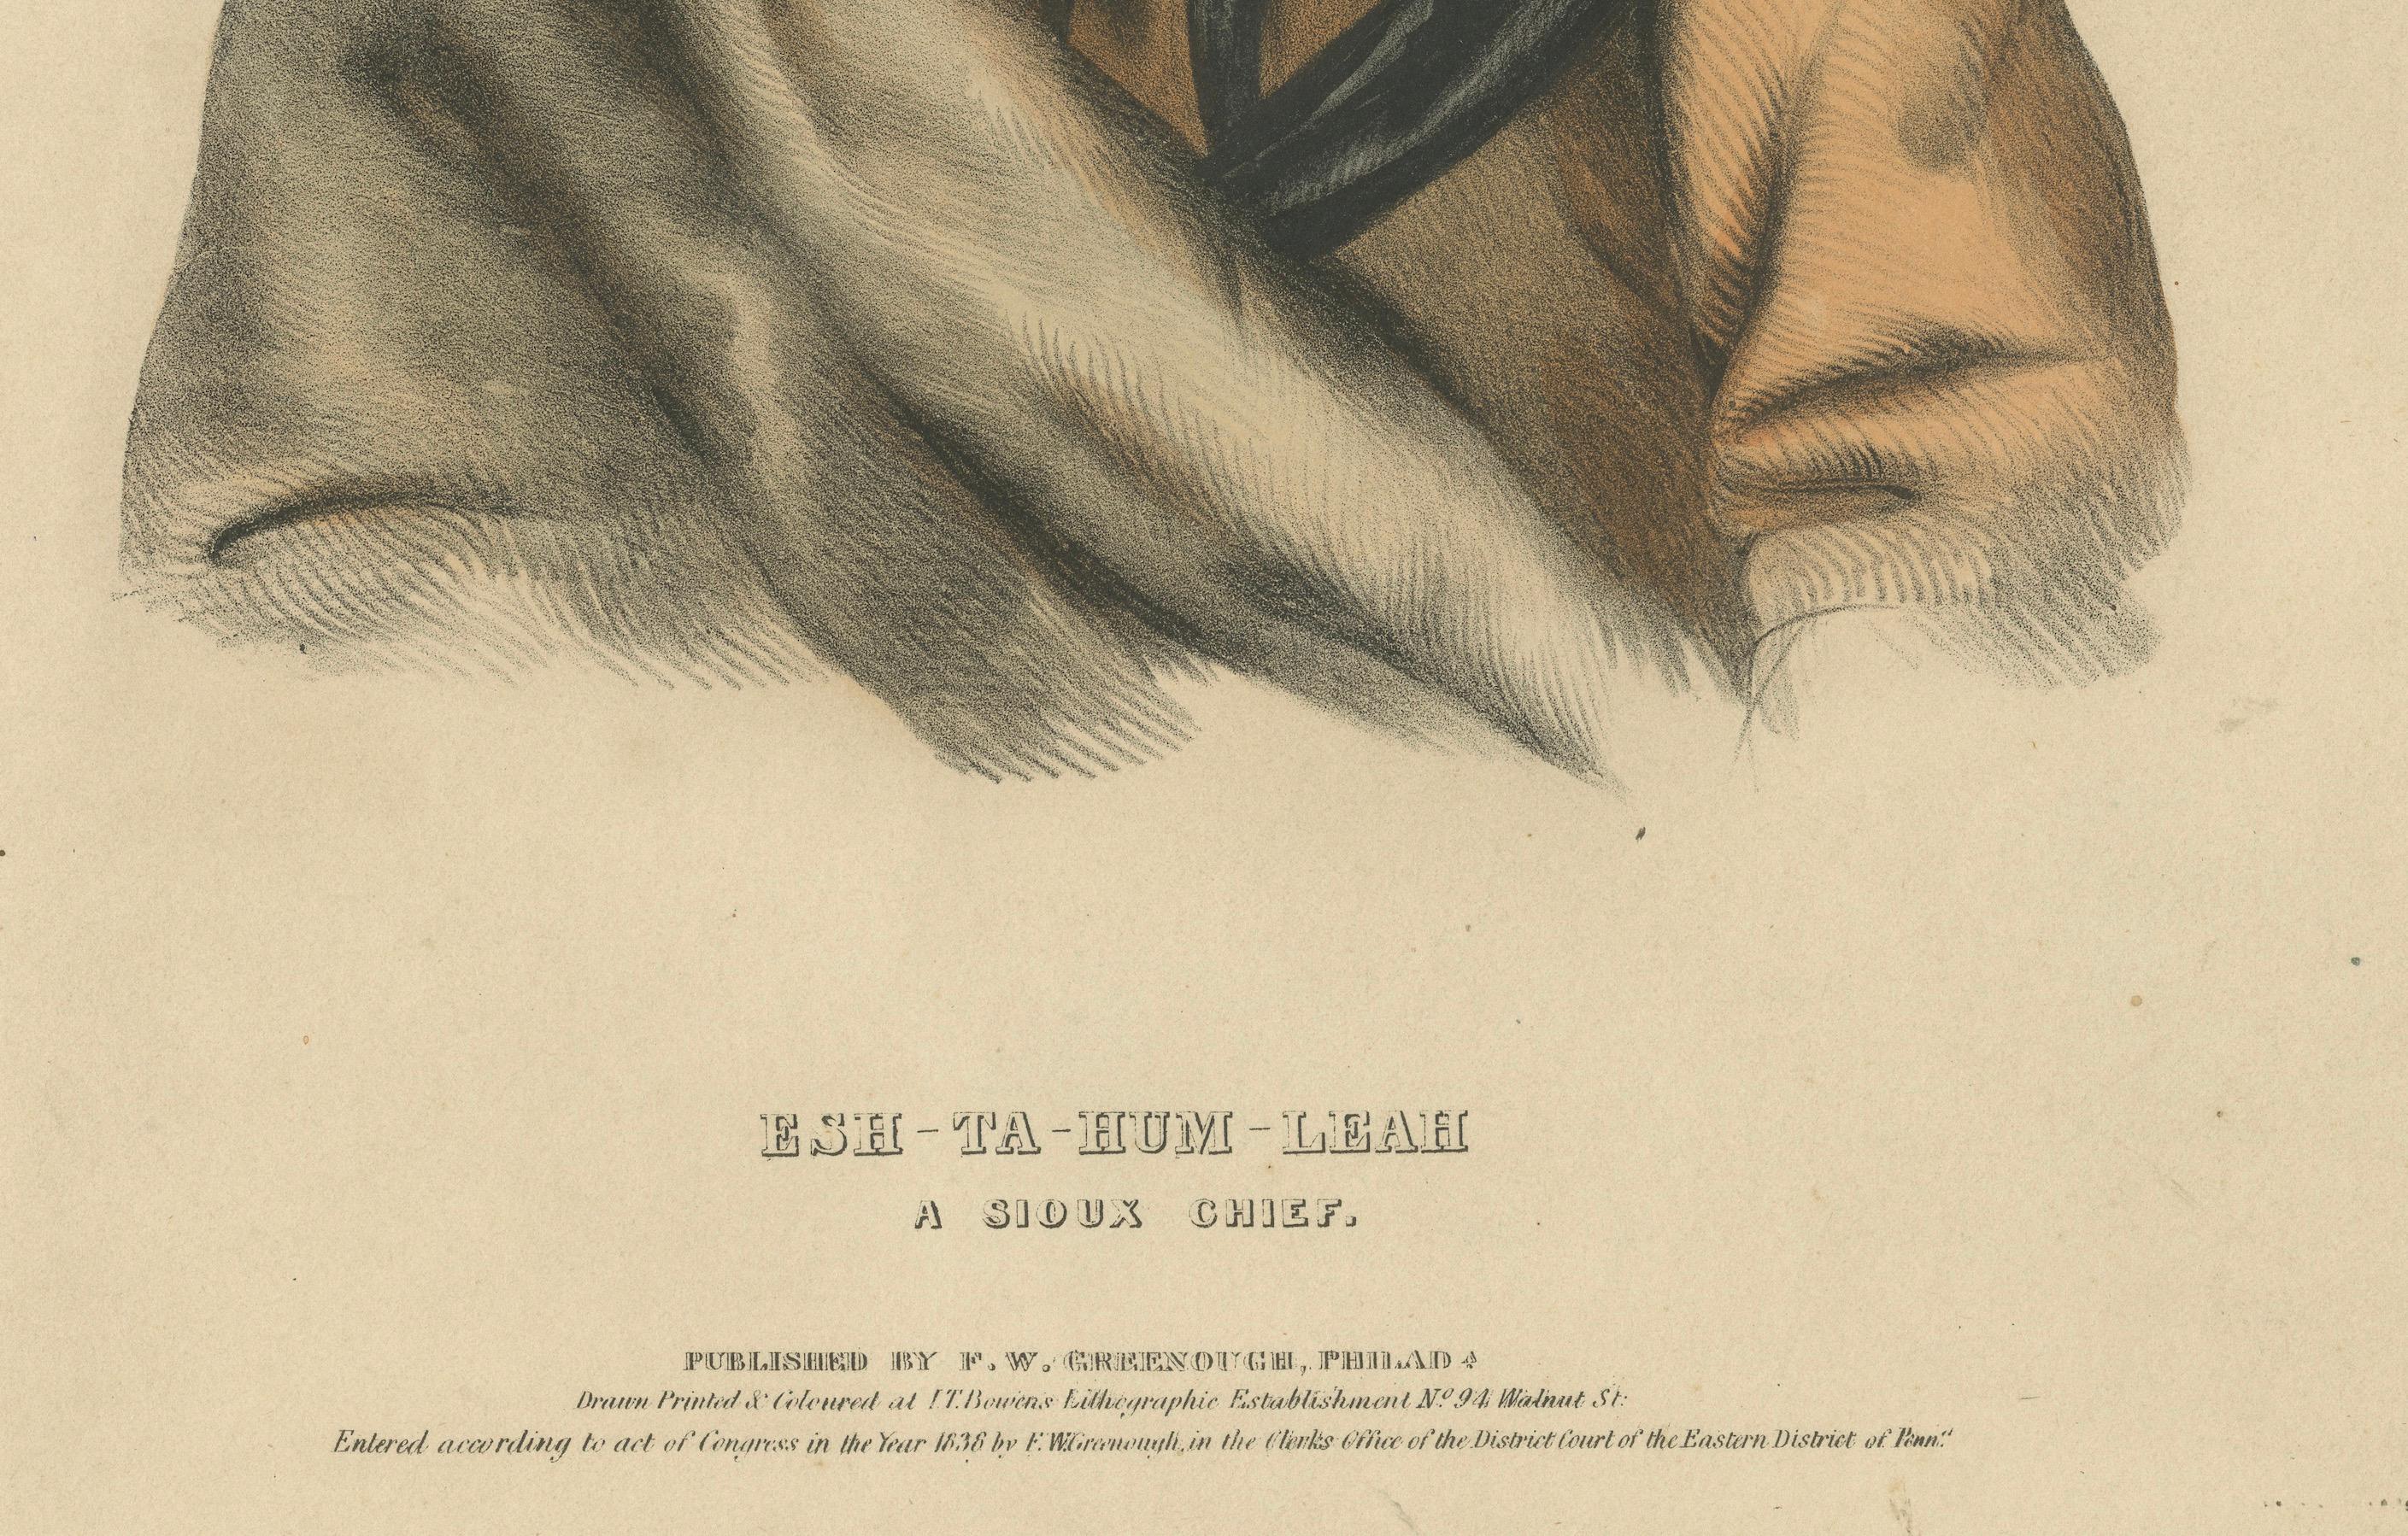 Paper Large Antique Print of Esh-Ta-Hum-Leah, a Sioux Chief, circa 1838 For Sale